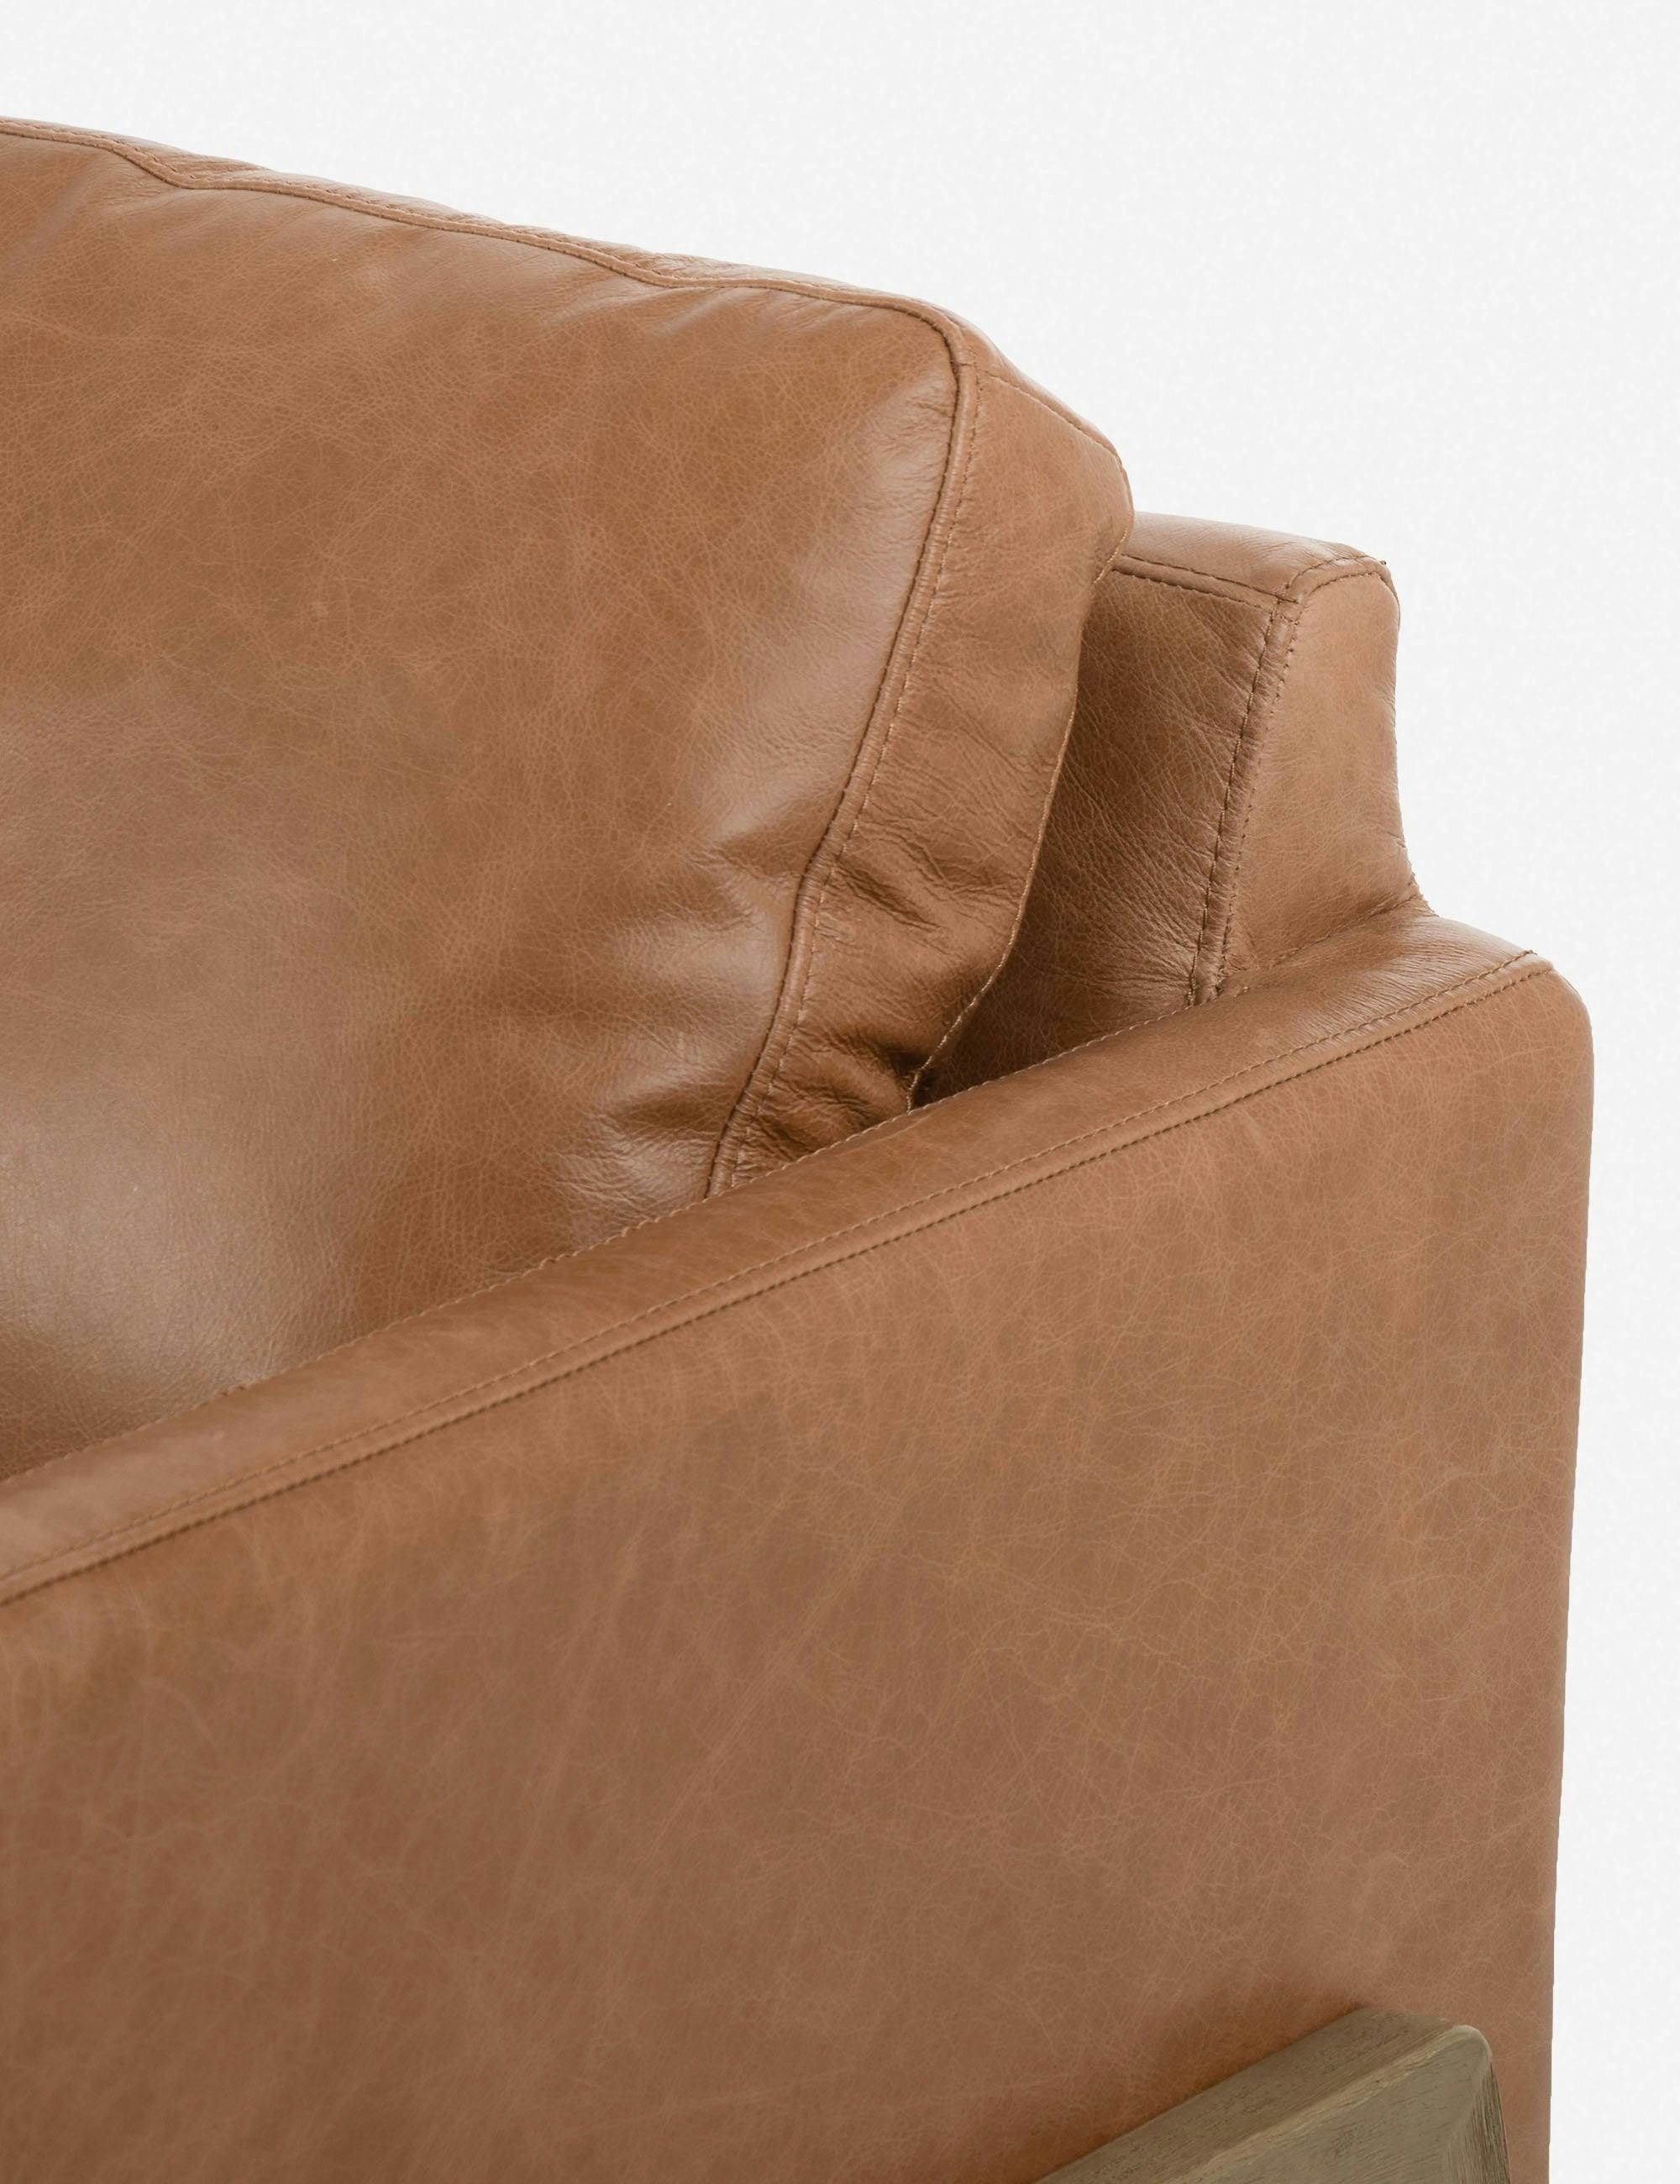 Afton Sofa - Tan Leather